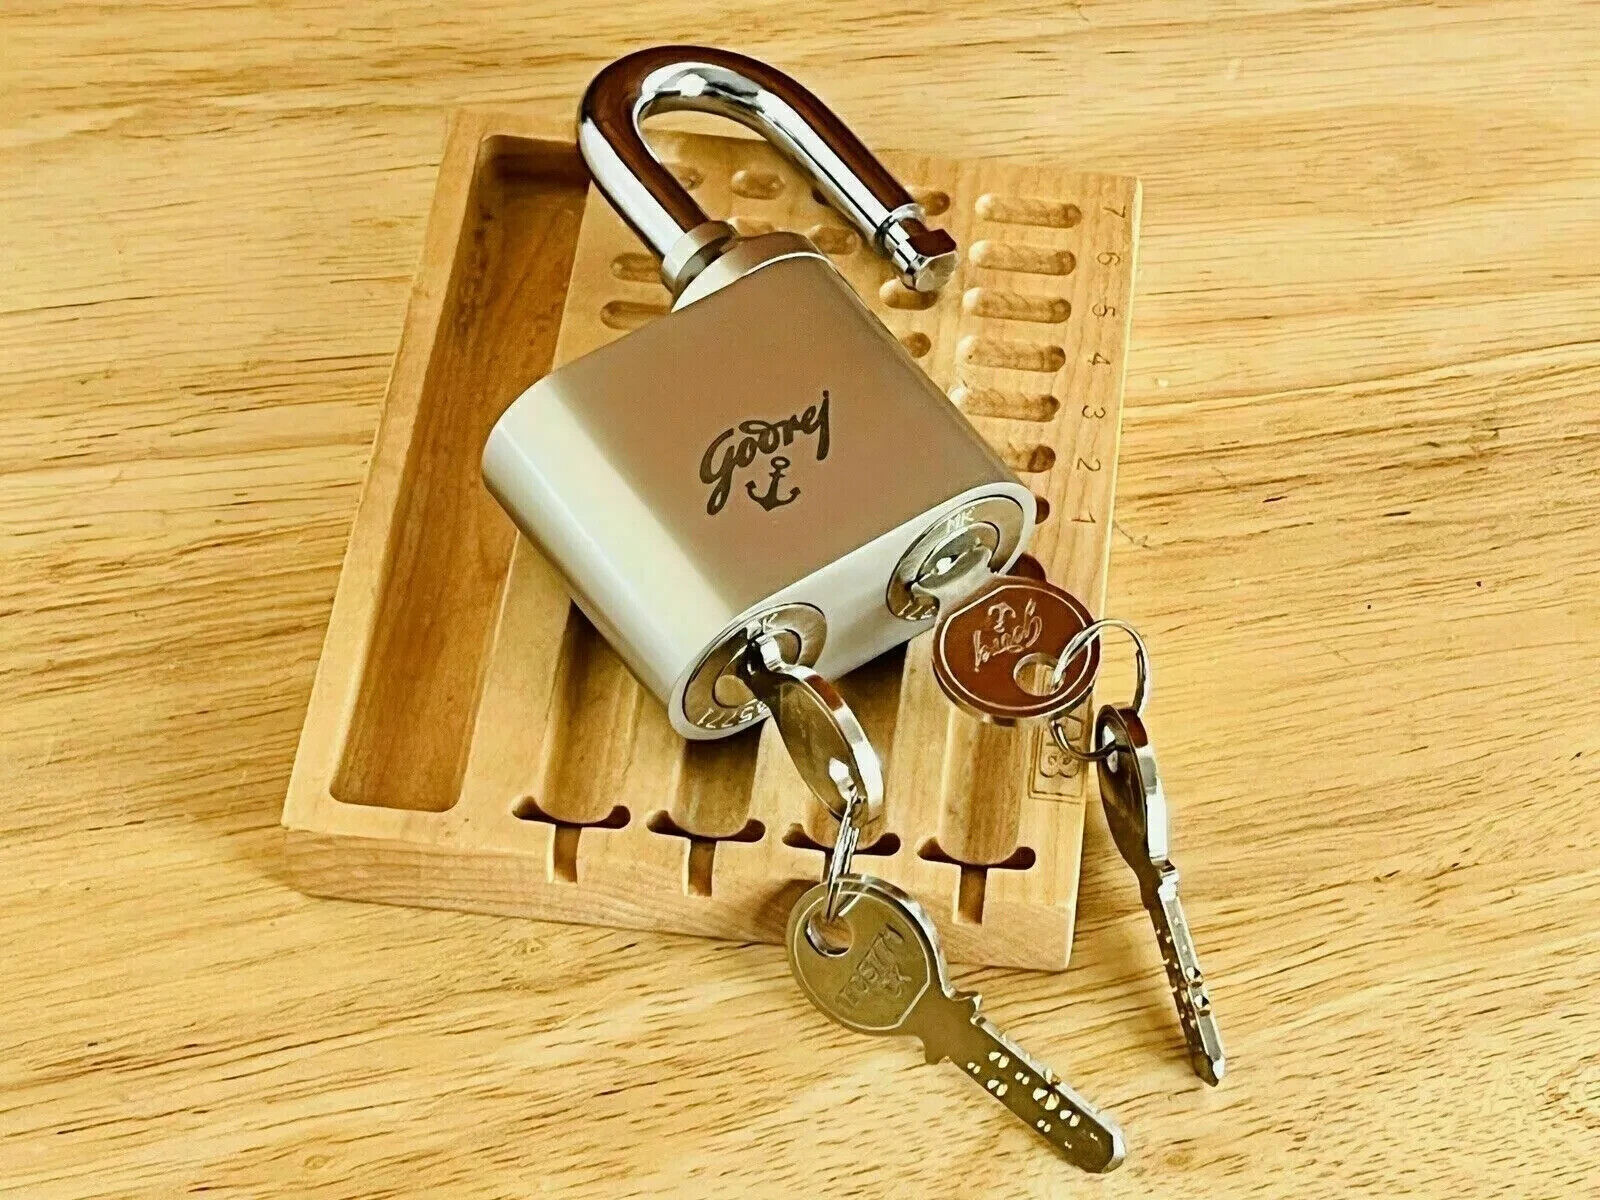 Dual Access Padlock With 2 Sets of Keys Locksport HighSecurity Godrej Locks